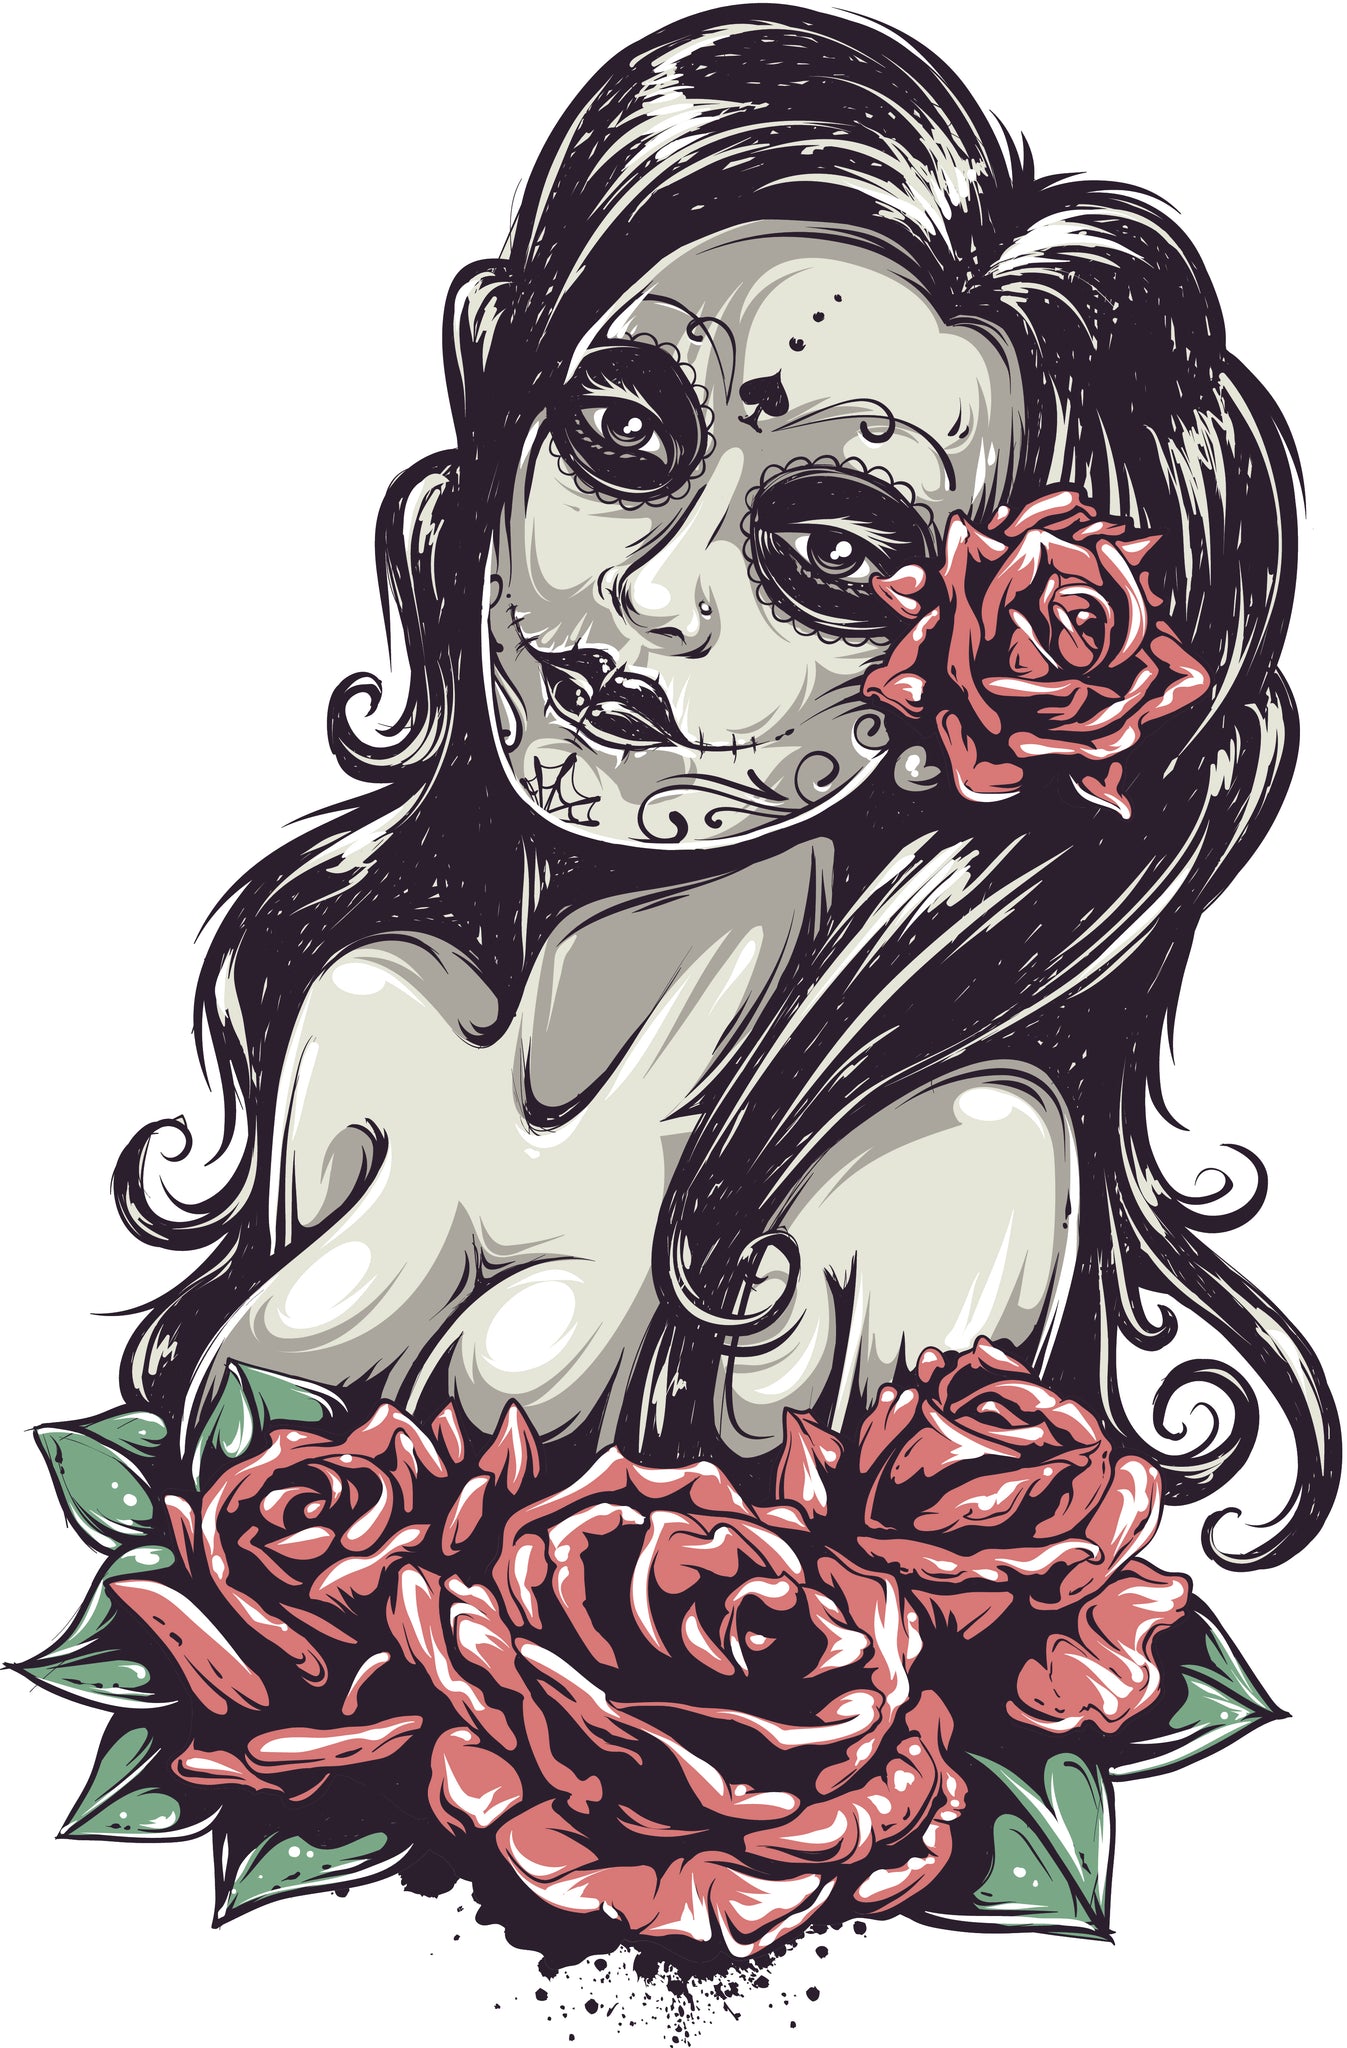 Topless Dia De Los Muertos Lady with Roses Vinyl Decal Sticker